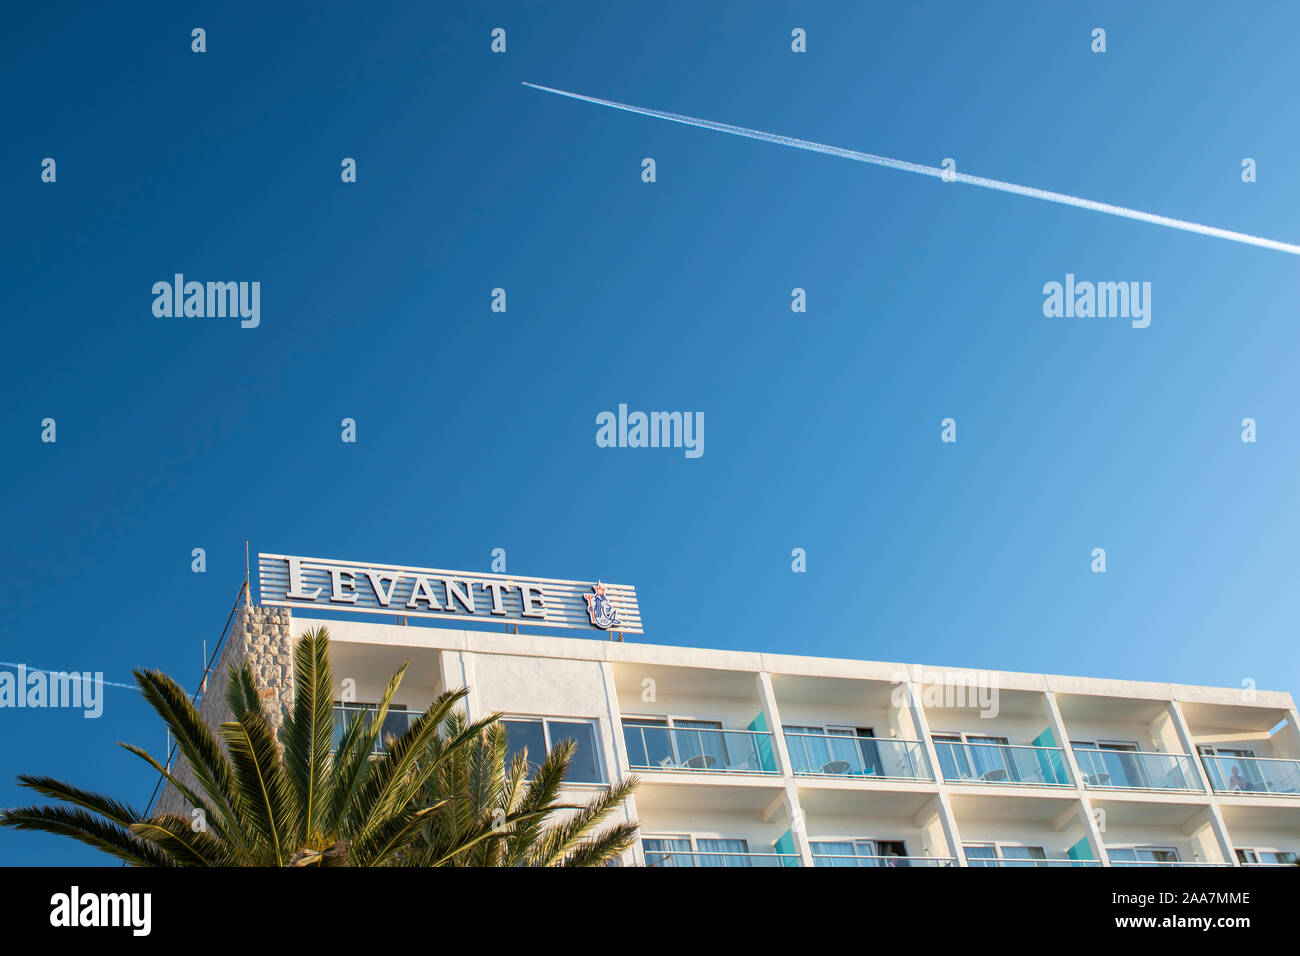 Cala Bona, Majorca, Spain, October 19, 2019, Levante Hotel with an Aircraft Trail in a clear blue sky. Stock Photo